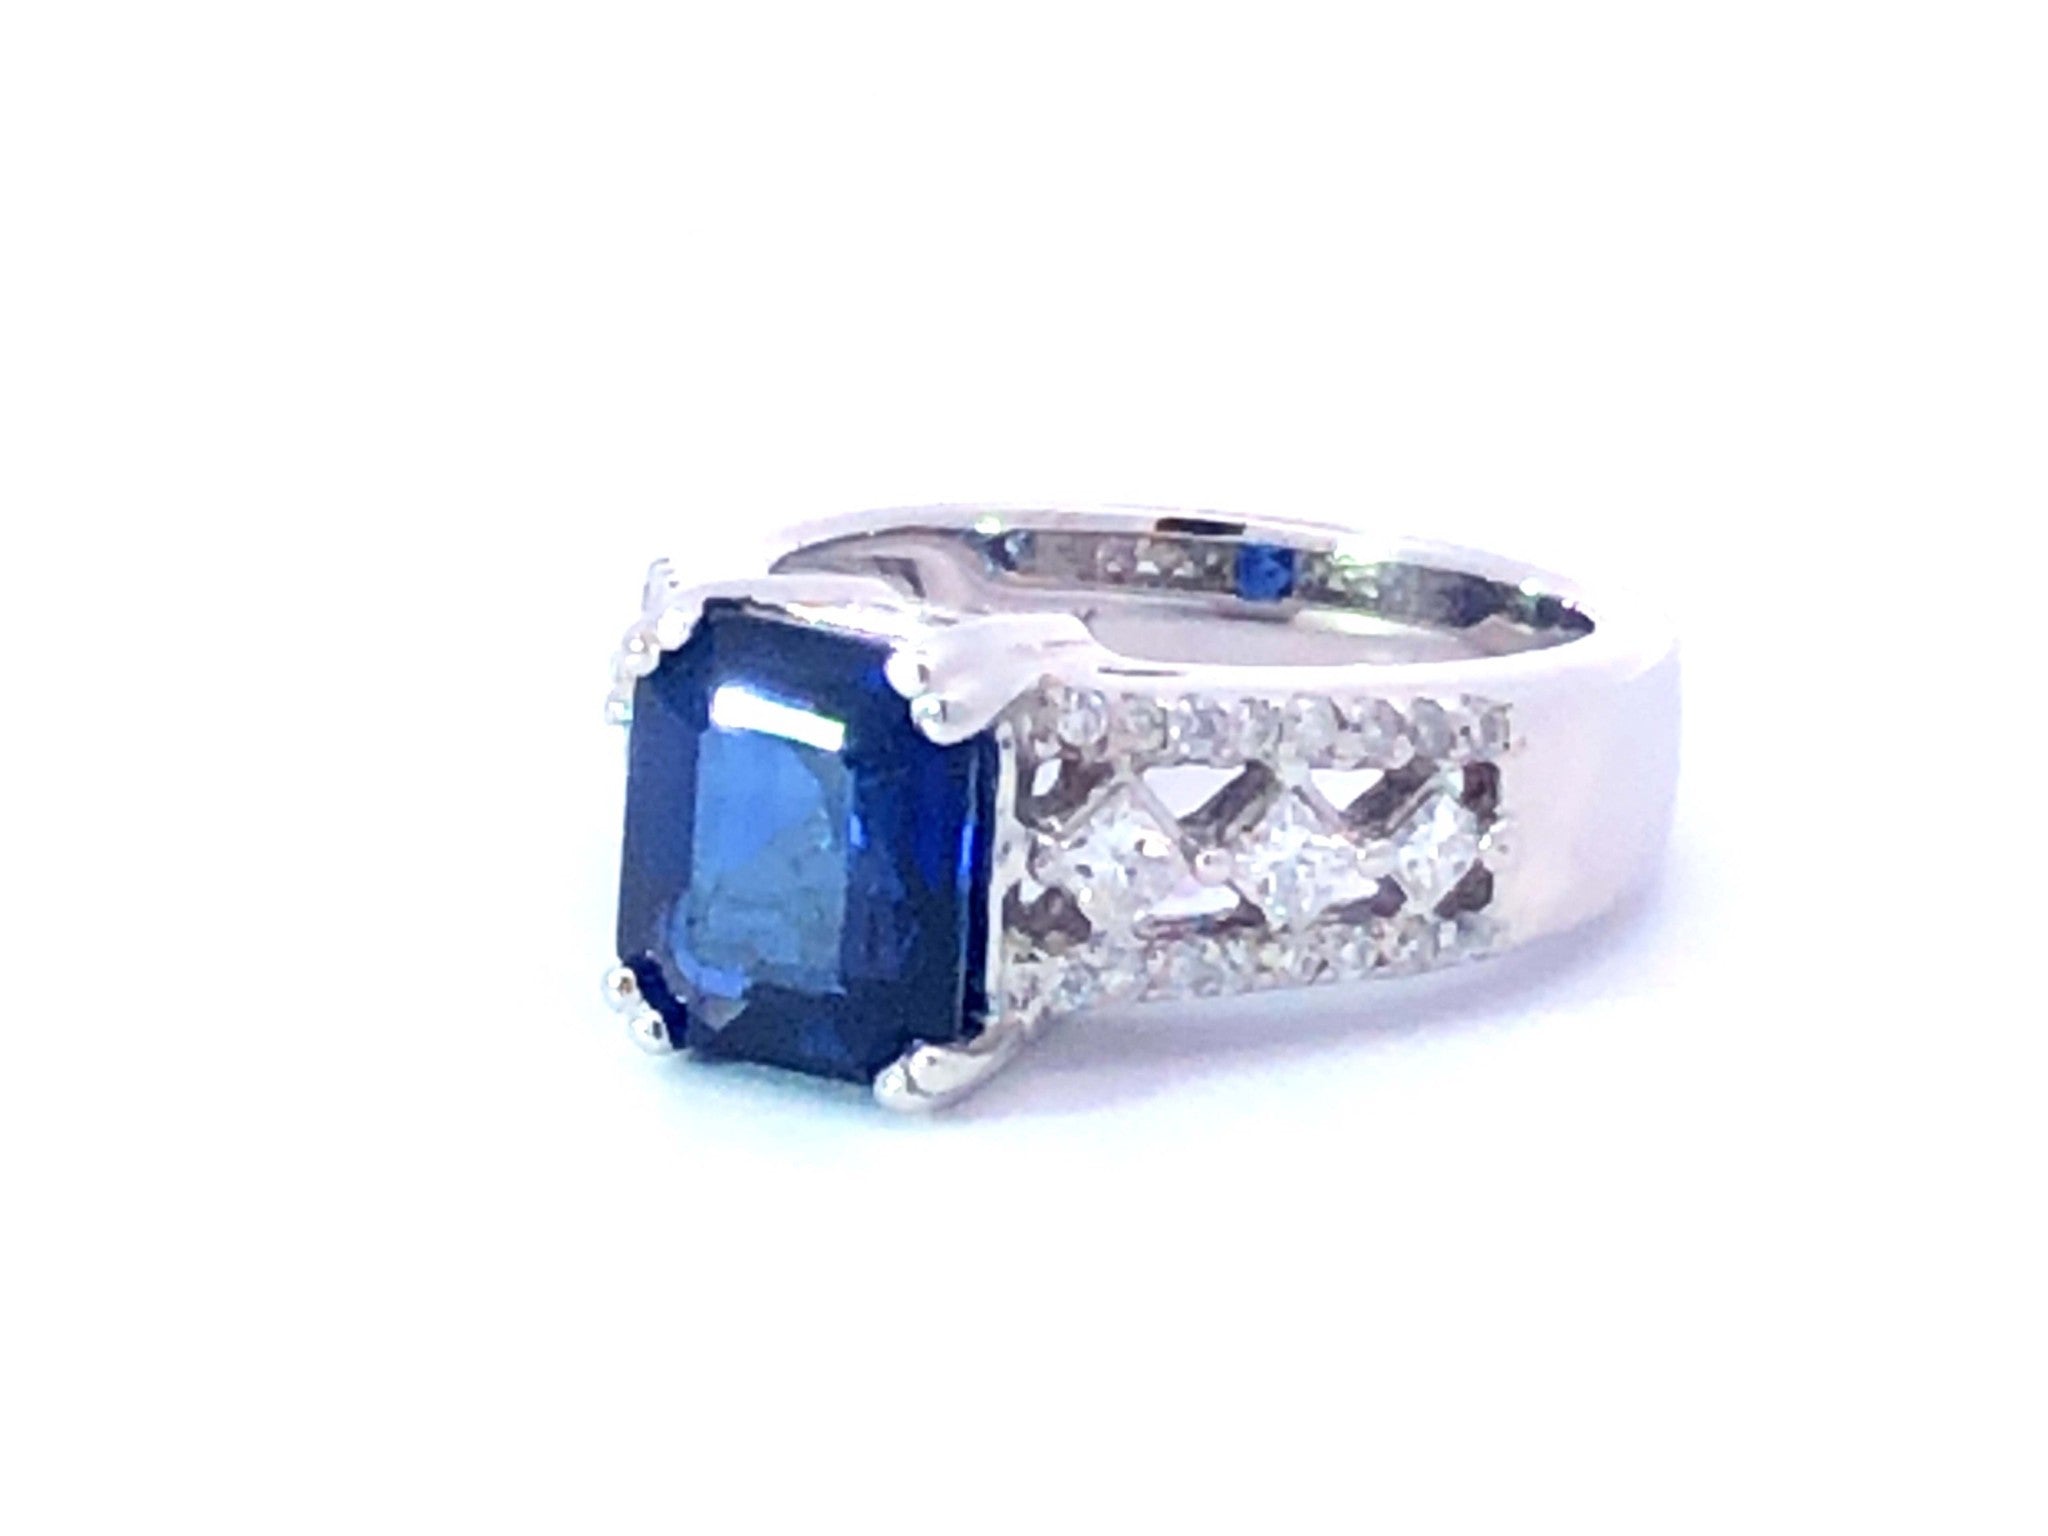 GIA Blue Sapphire Diamond Ring in 14k White Gold